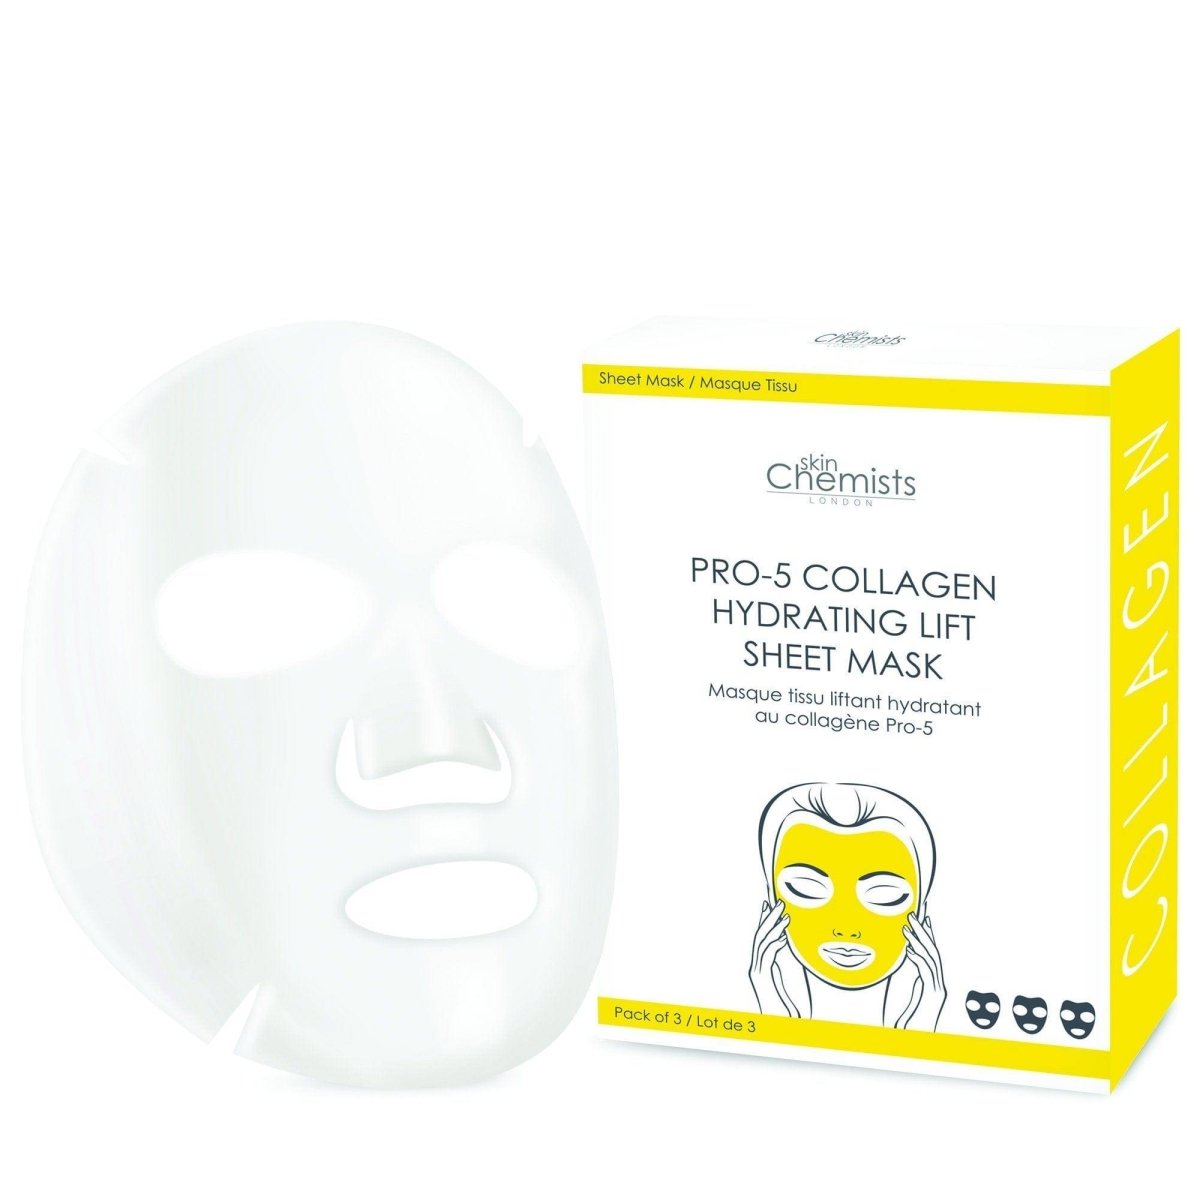 Pro - 5 Collagen Hydrating Lift Sheet Mask - skinChemists